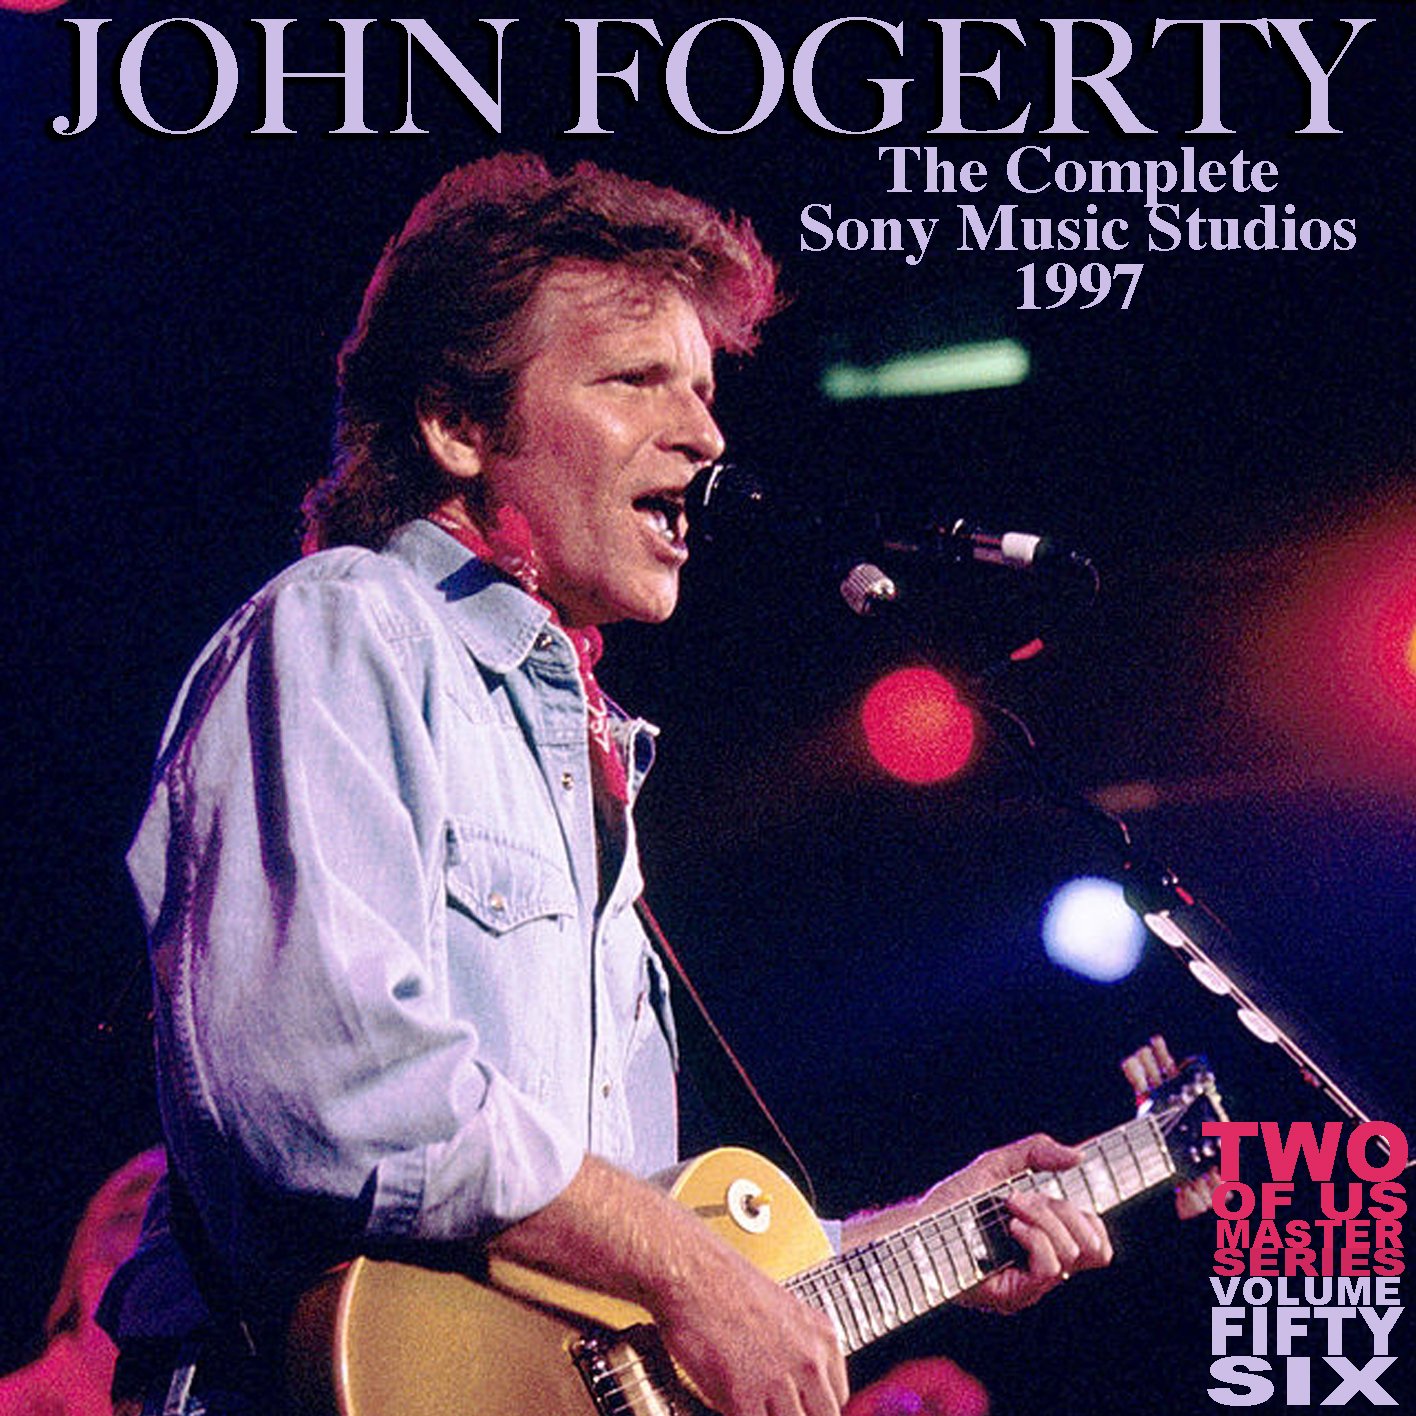 JohnFogerty1997-06-04SonyMusicStudiosNYC (1).jpg